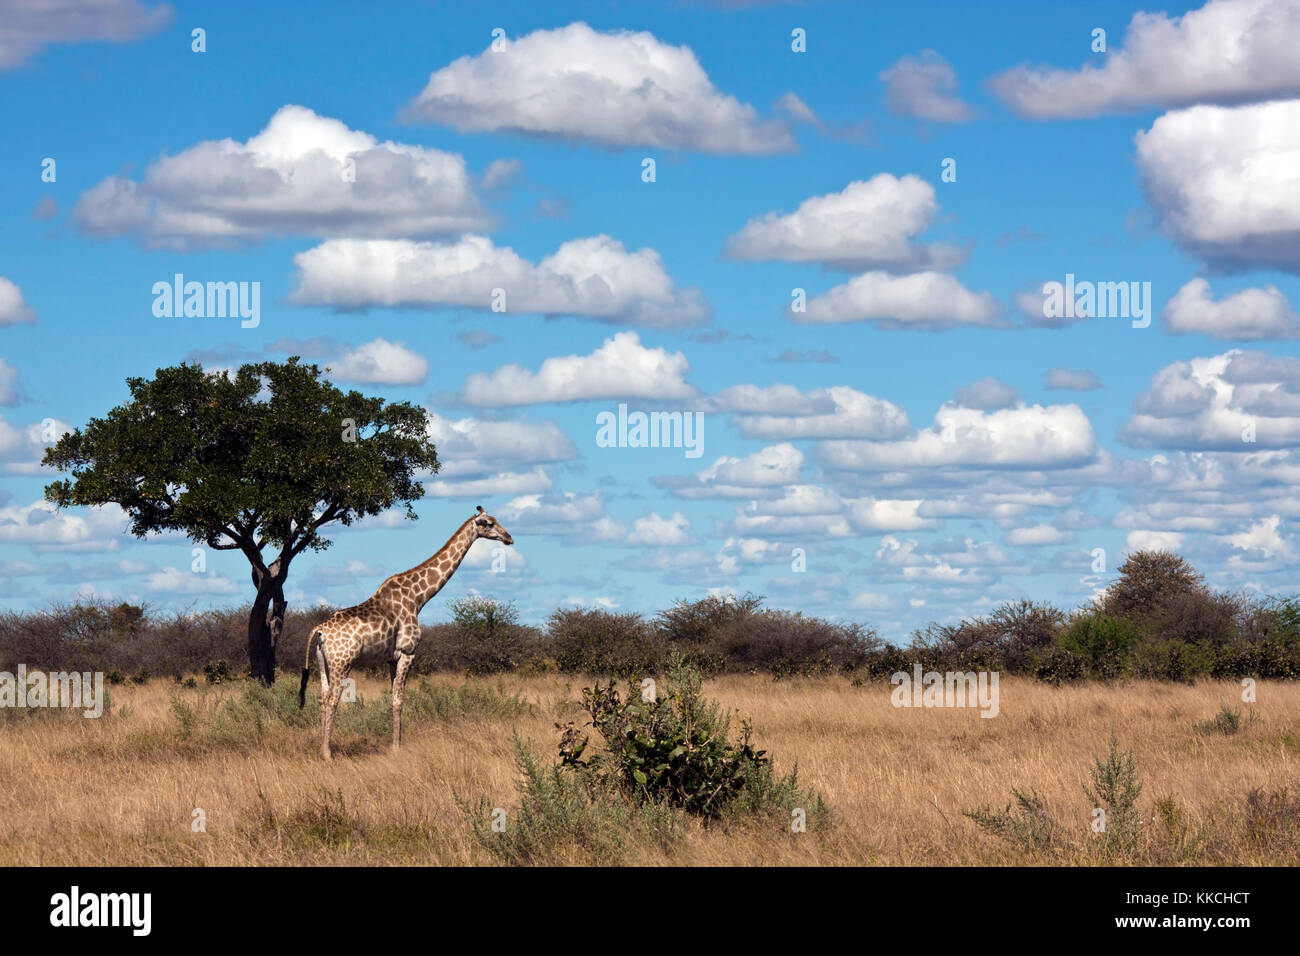 A Giraffe (Giraffa camelopardalis) in the Savuti region of northern Botswana. Stock Photo